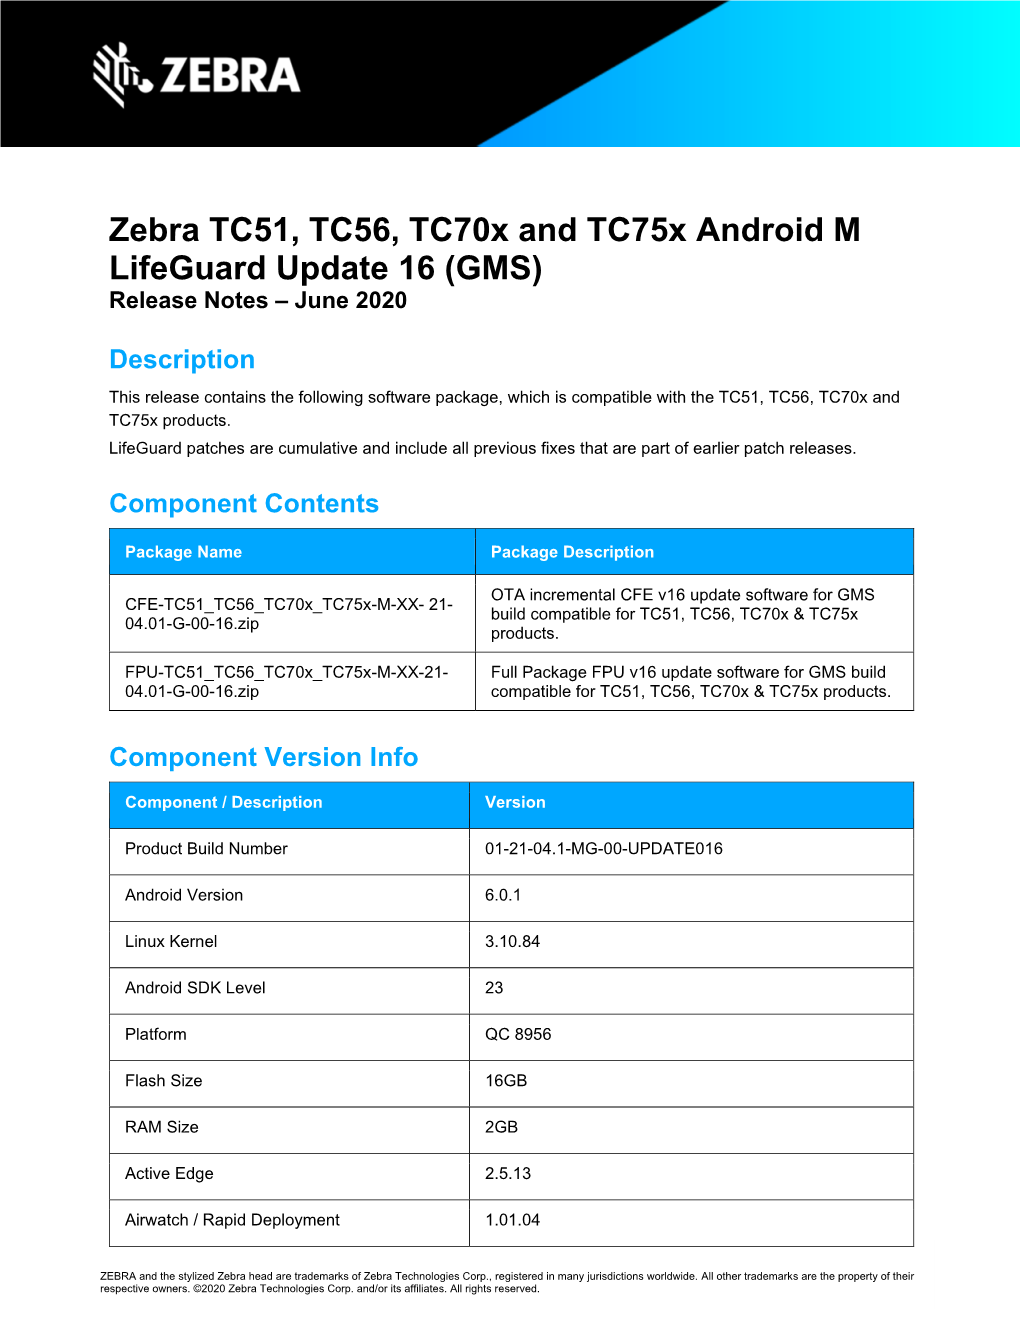 Zebra TC51, TC56, Tc70x and Tc75x Android M Lifeguard Update 16 (GMS) Release Notes – June 2020